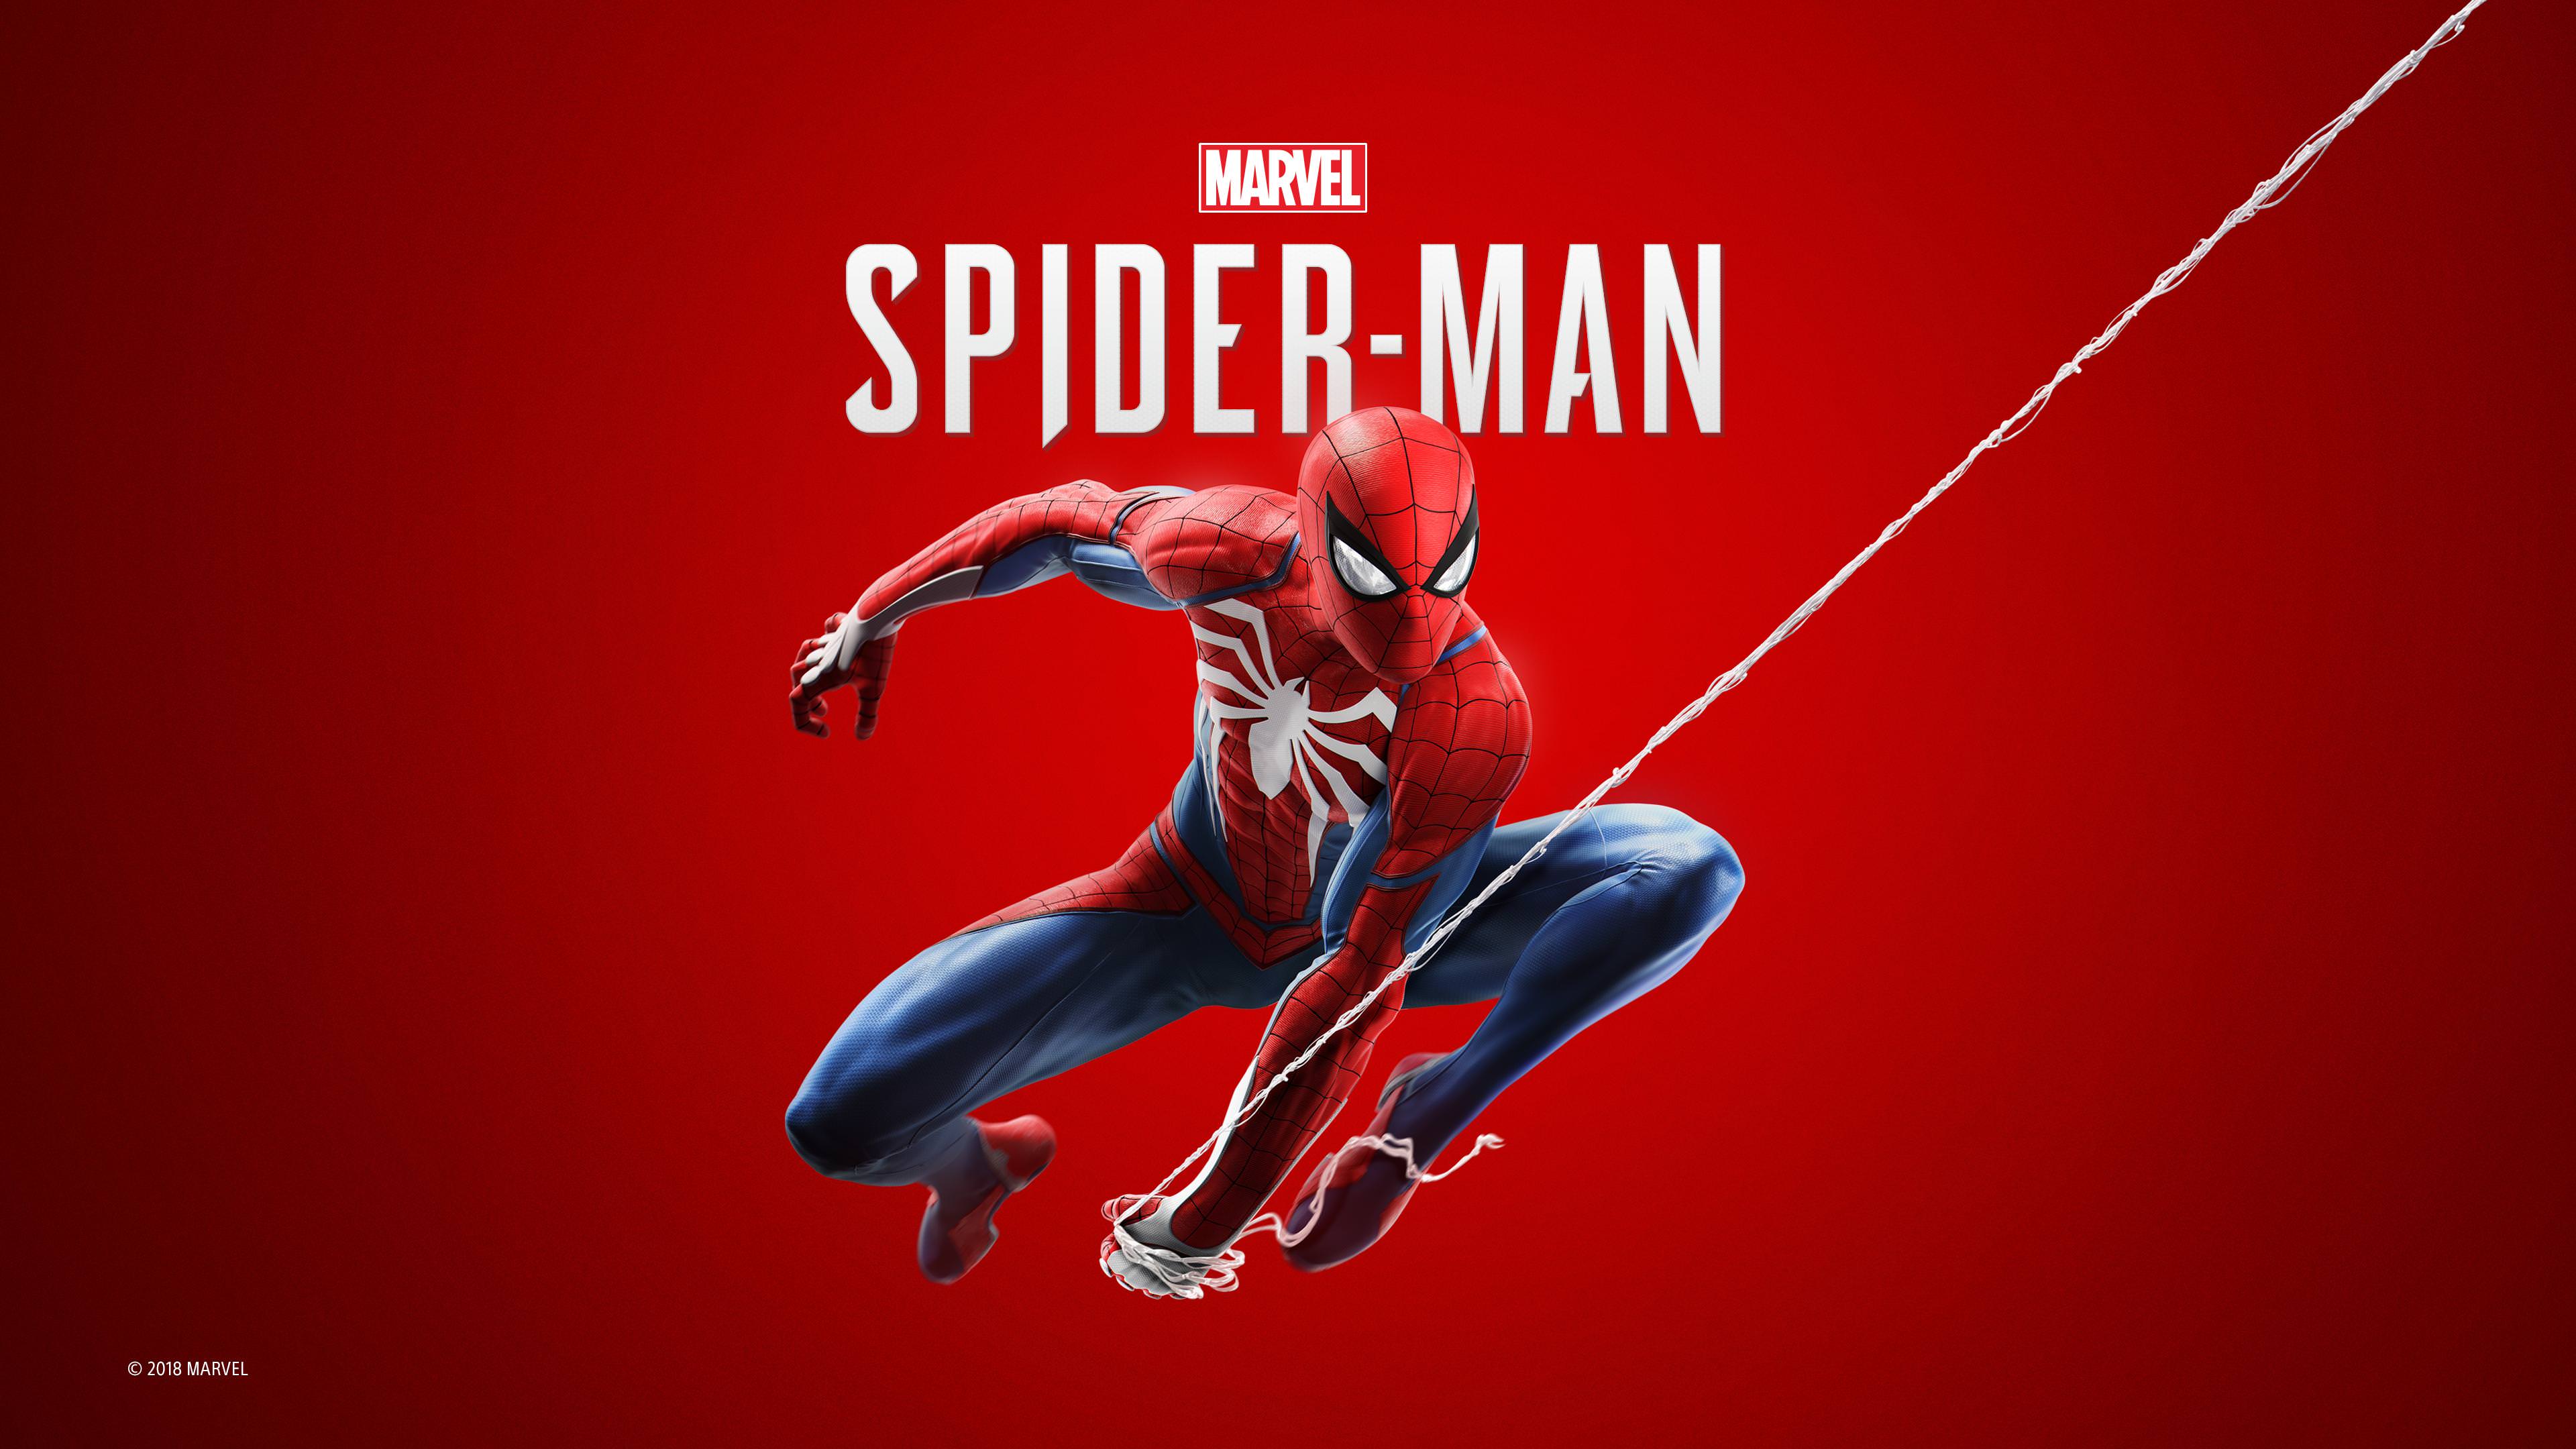 [image][image] Spider-man Ps4 - Marvel's Spider Man Ps4 , HD Wallpaper & Backgrounds